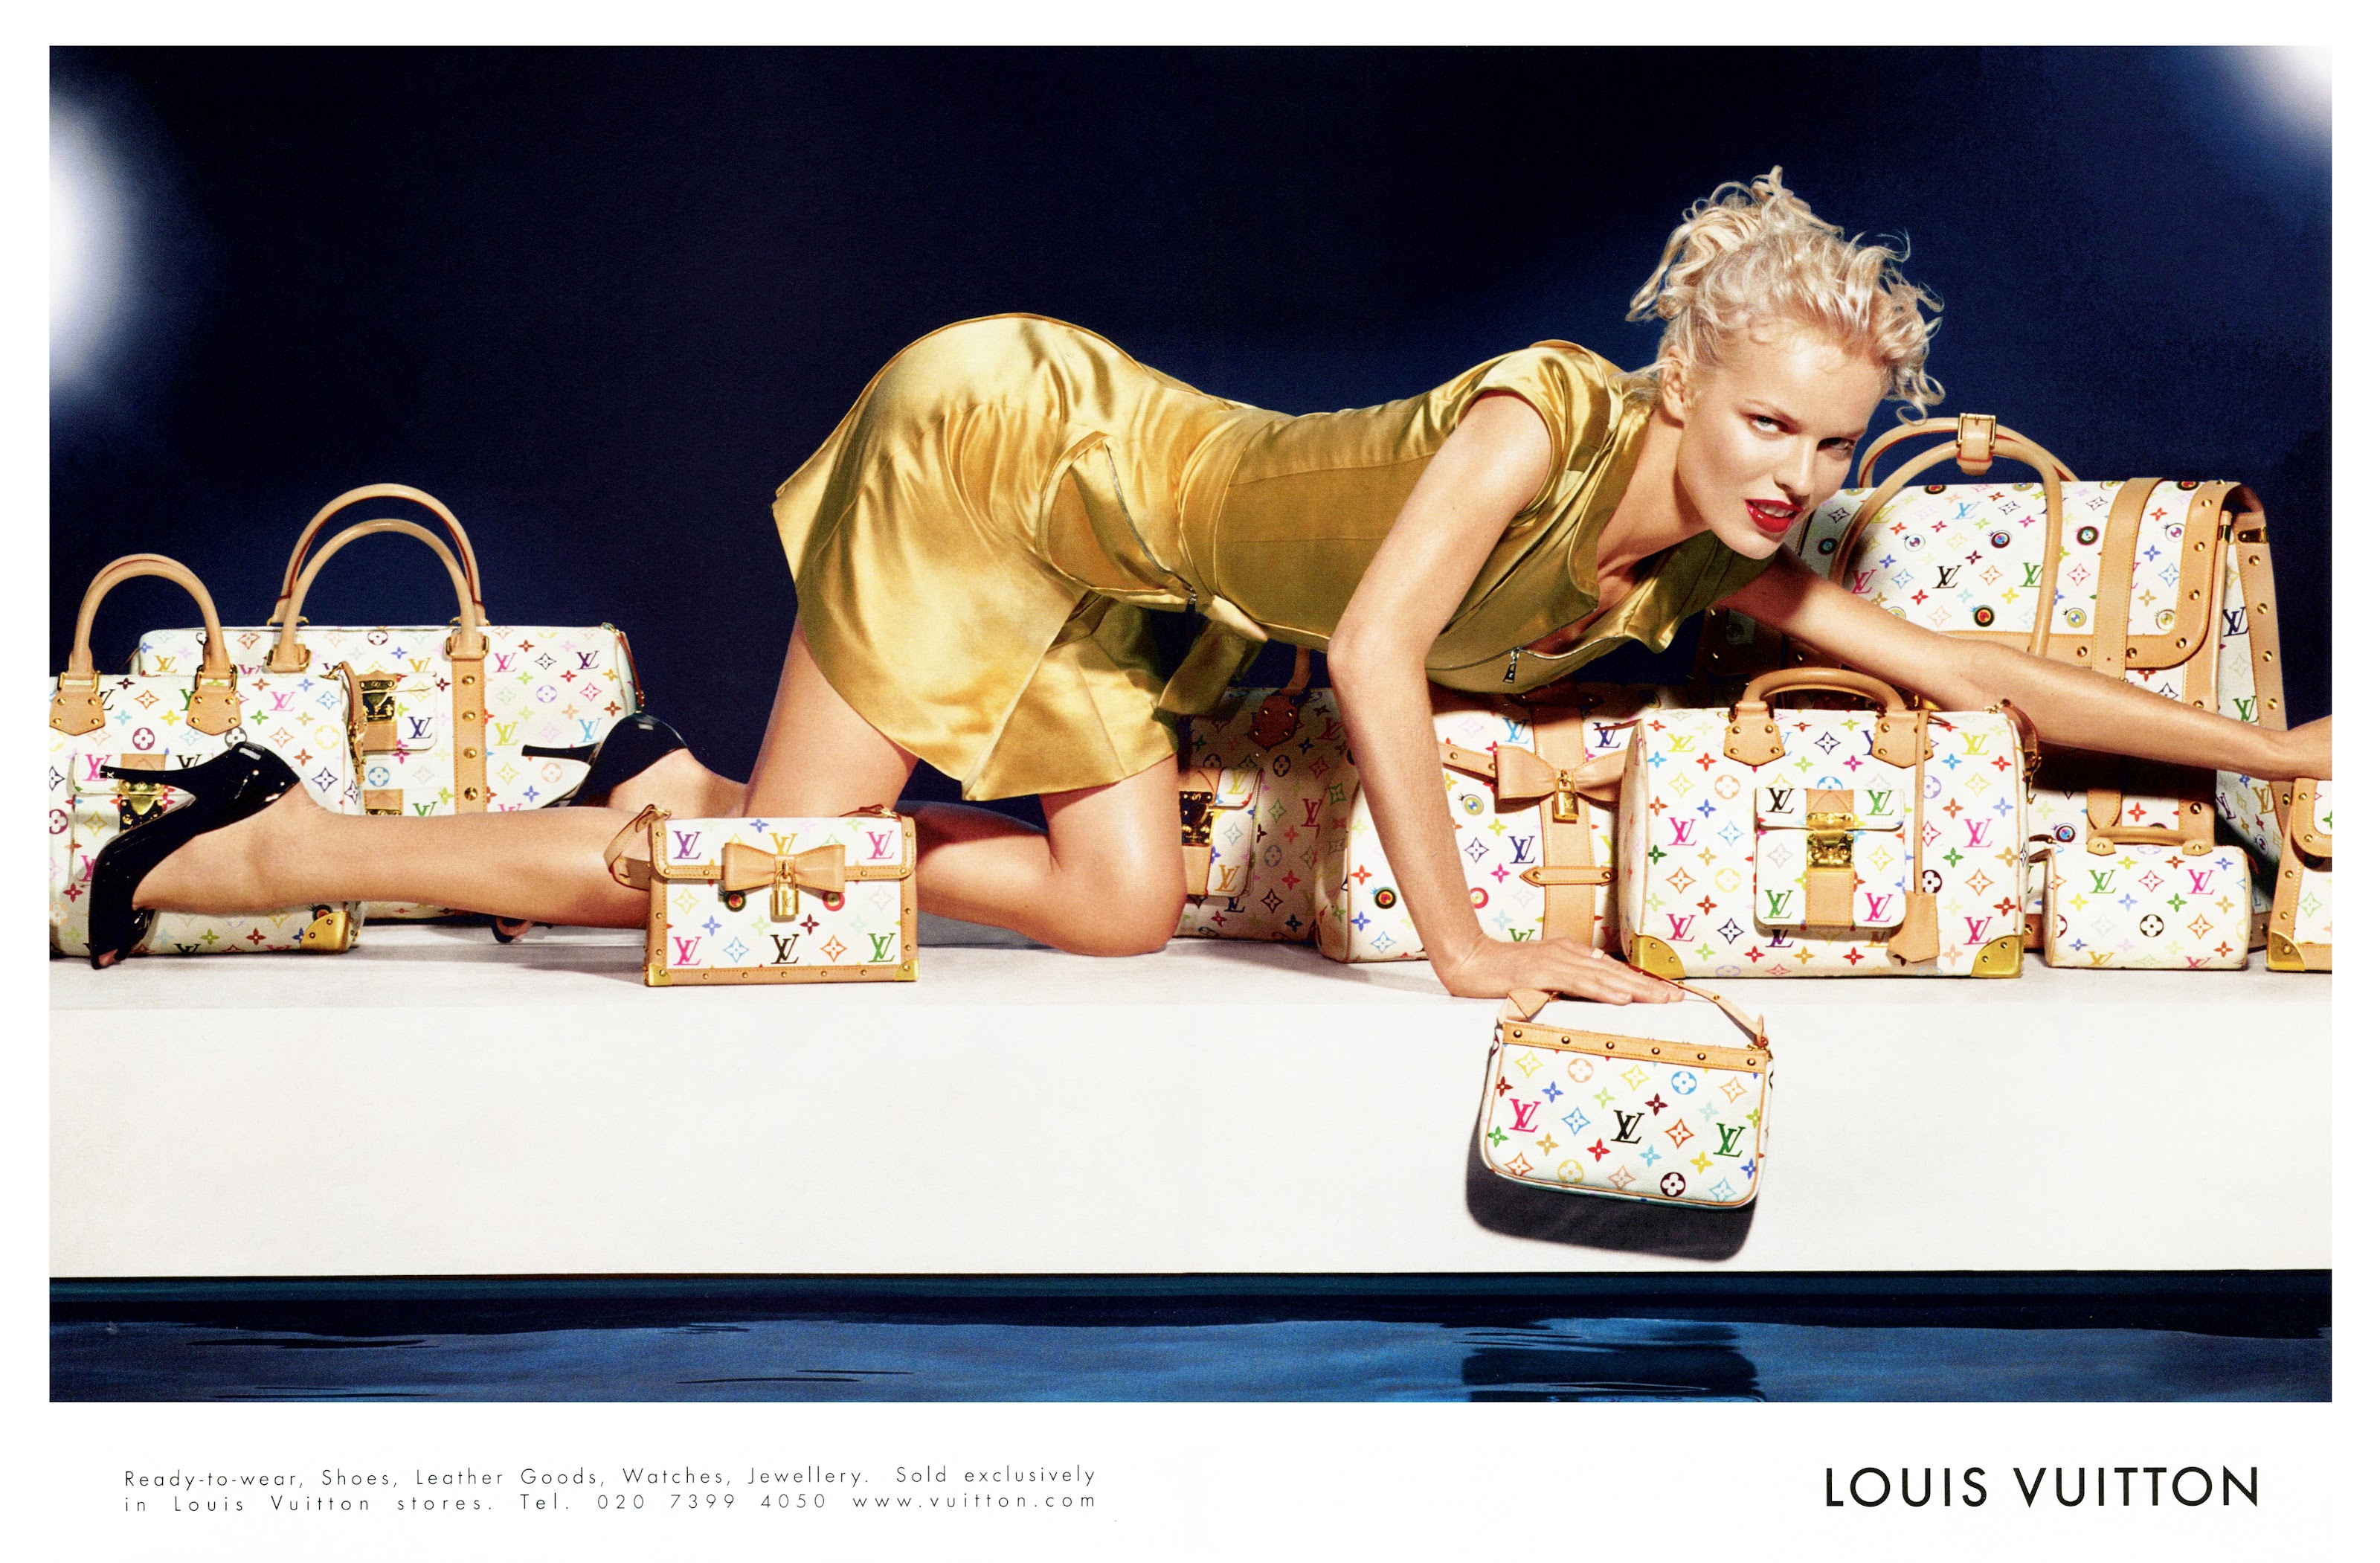 Campaign: Louis Vuitton Season: Spring 2006 Photographer: Mert